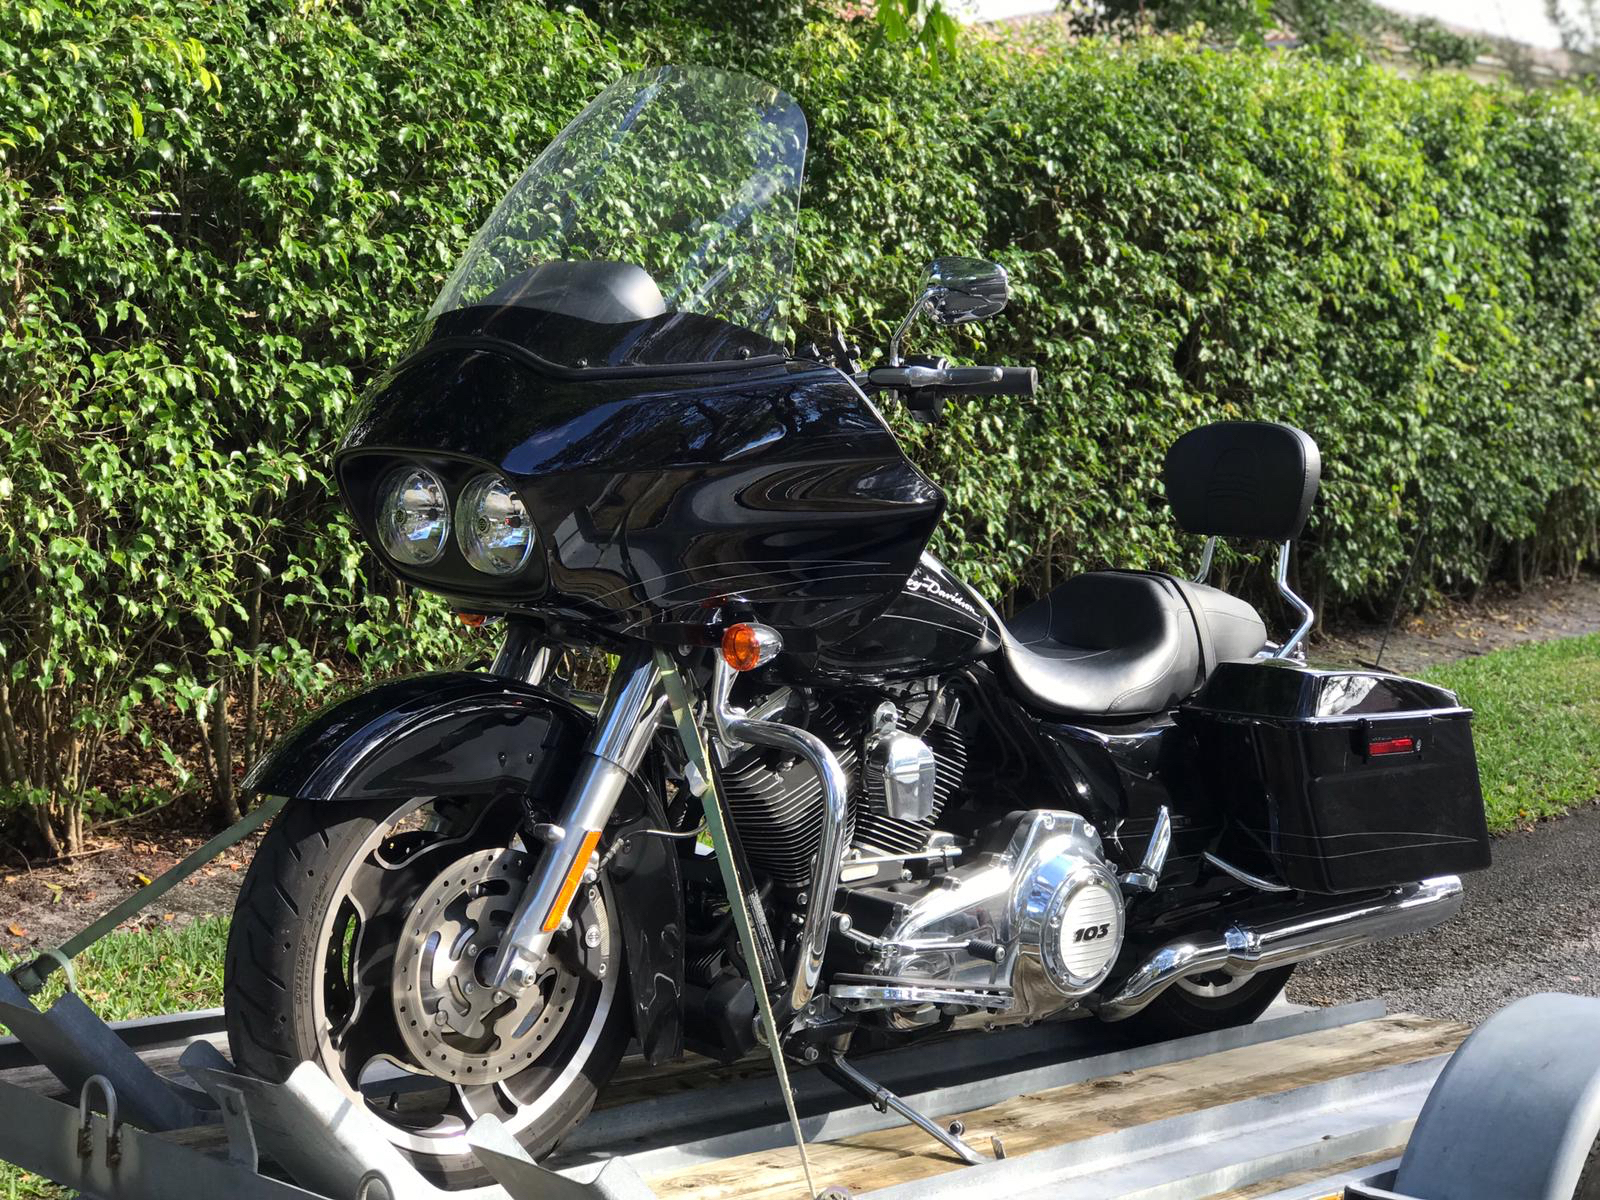 Used 2013 Harley-Davidson Road Glide® Custom Motorcycles In Lake - Harley Davidson Dealers In Florida Map